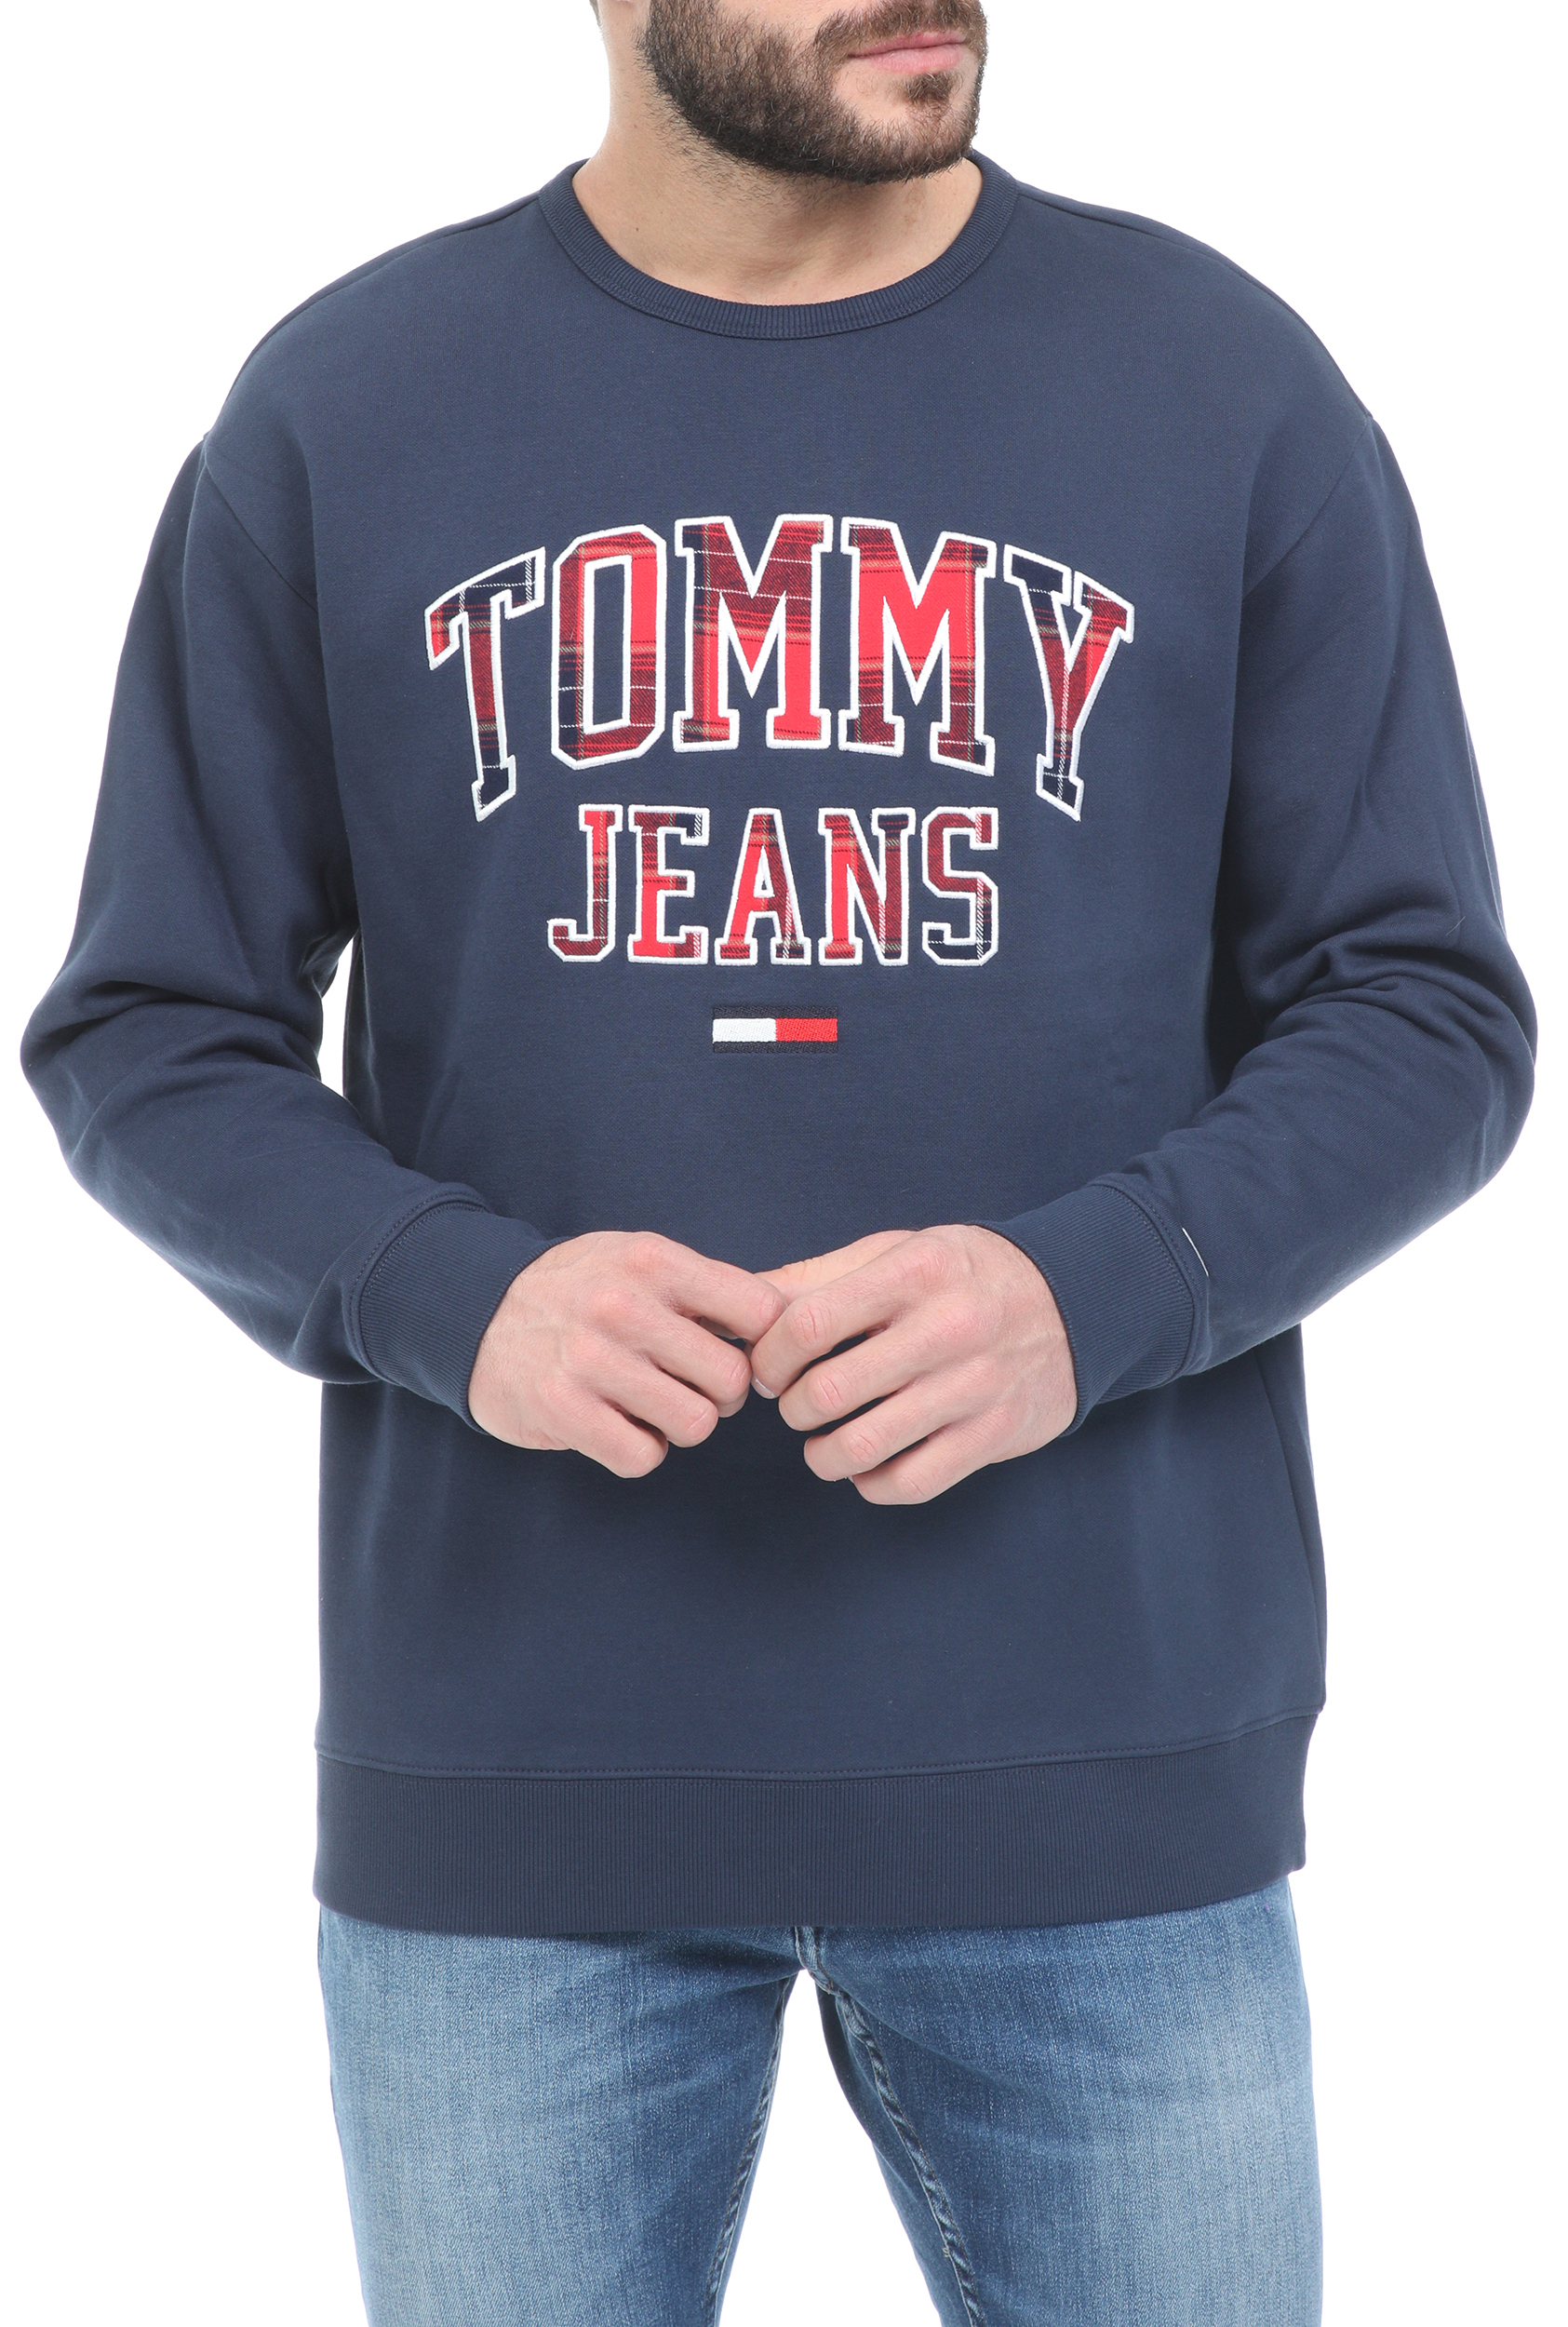 TOMMY HILFIGER - Ανδρική φούτερ μπλούζα TOMMY HILFIGER PLAID TOMMY GRAPHIC CREW μπλε